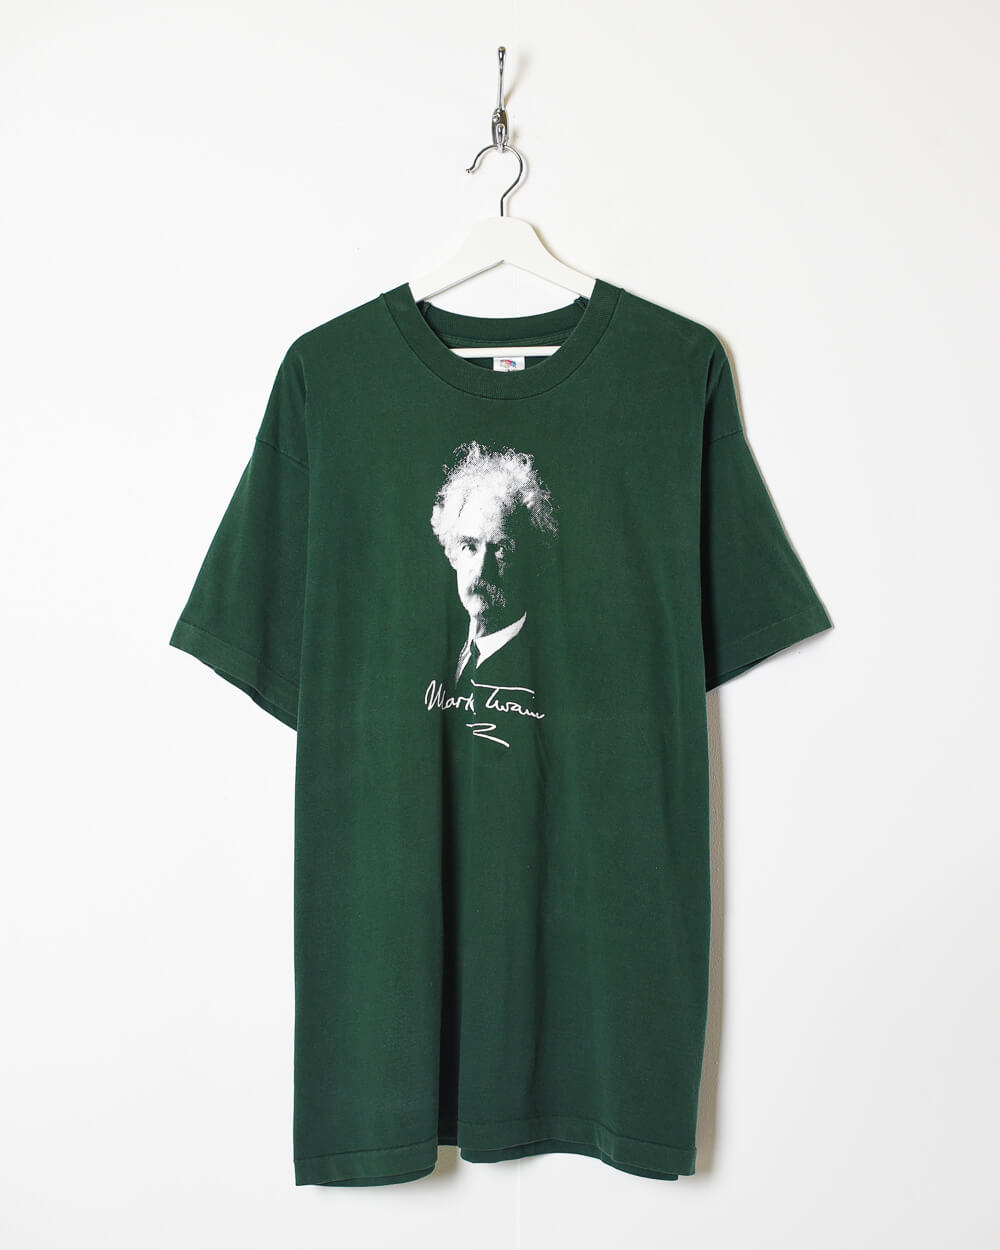 Green Mark Twain T-Shirt - X-Large 